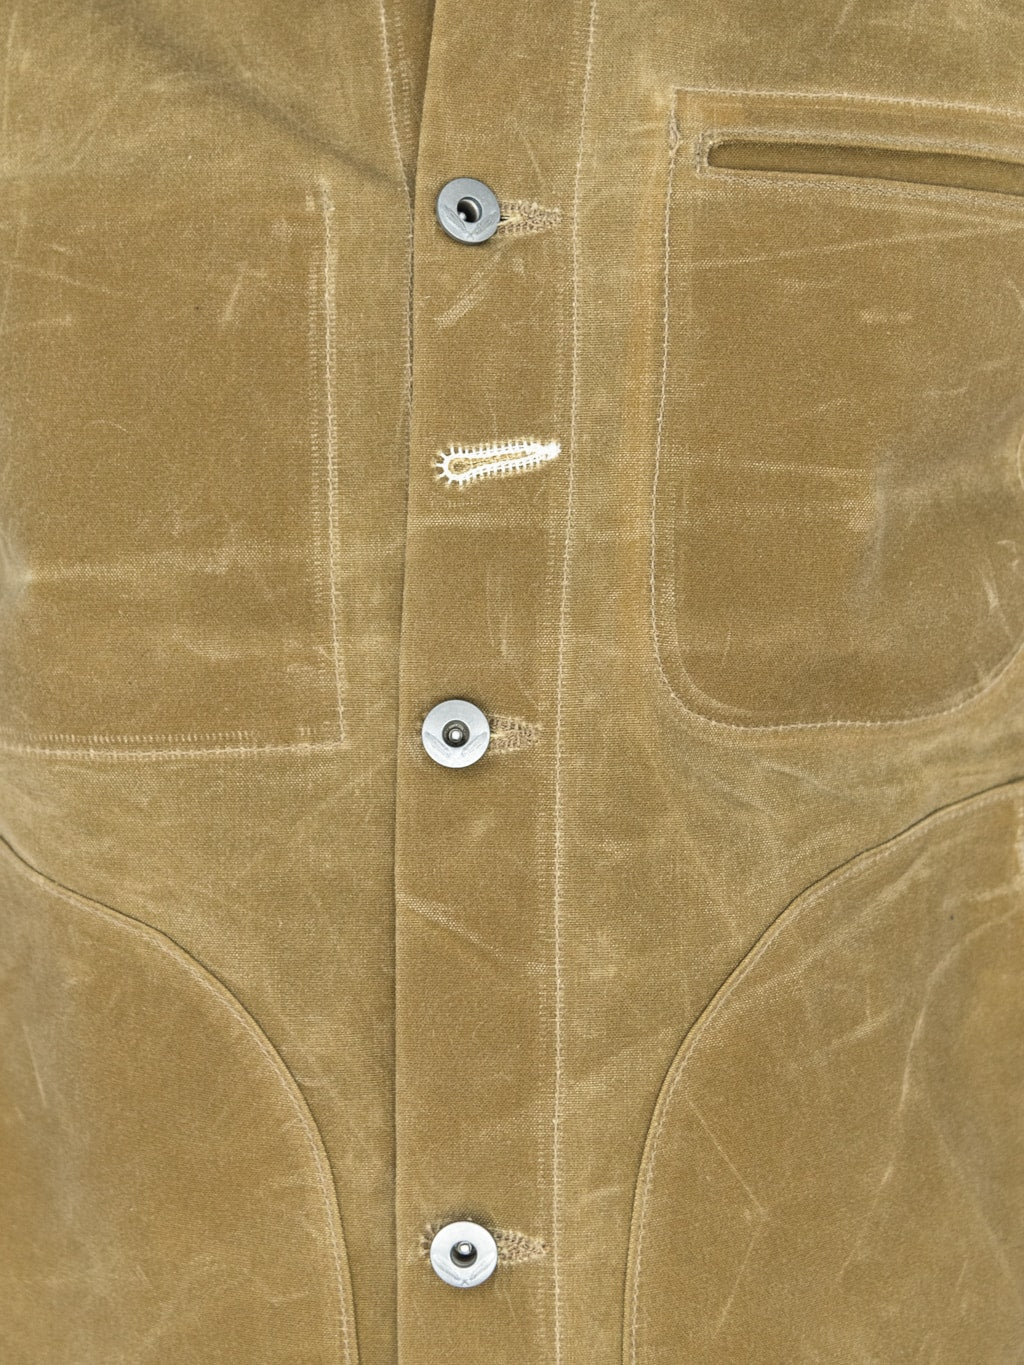 Rogue Territory Waxed Canvas Supply Jacket Tan Ridgeline chest pockets